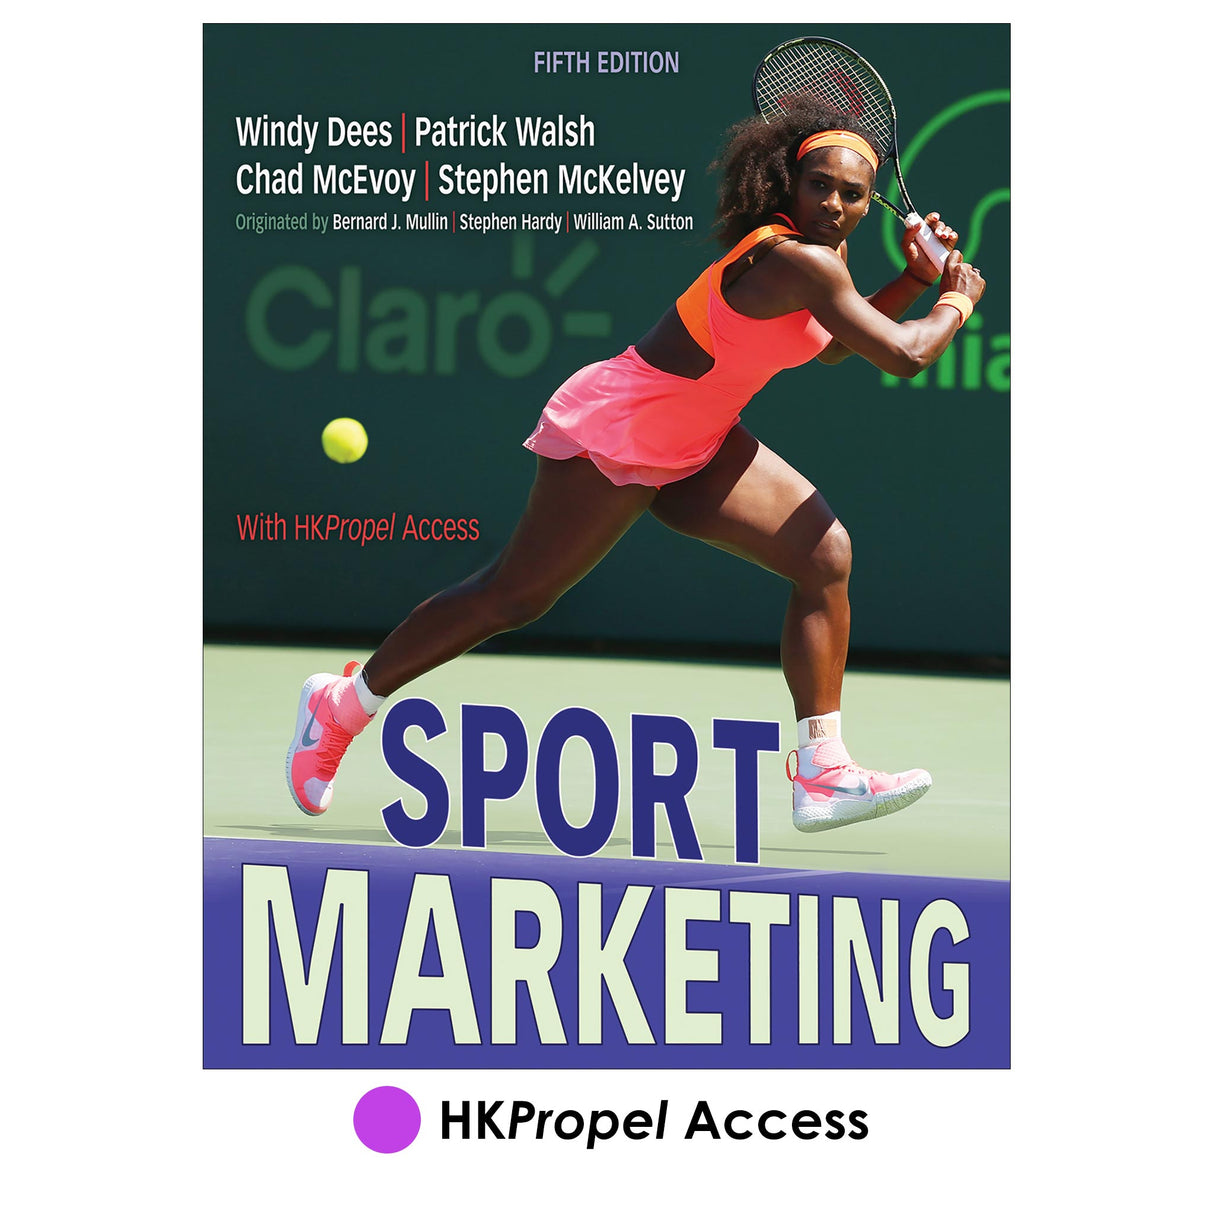 Sport Marketing 5th Edition HKPropel Access